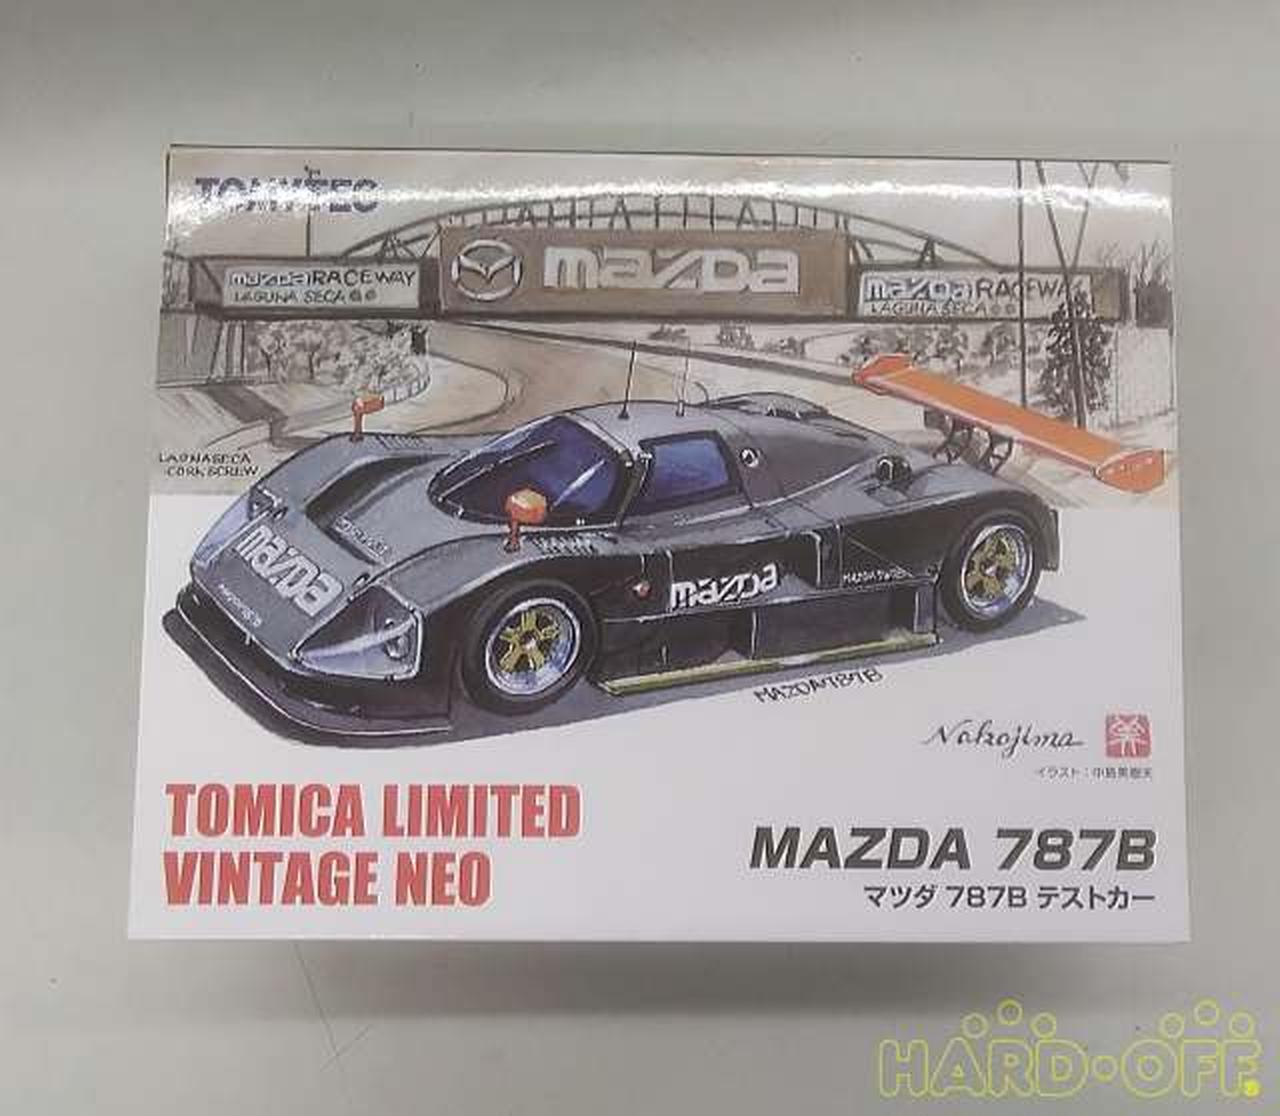 Tomy Tec Mazda 787B Test Car Tomica Limited Vintage Neo